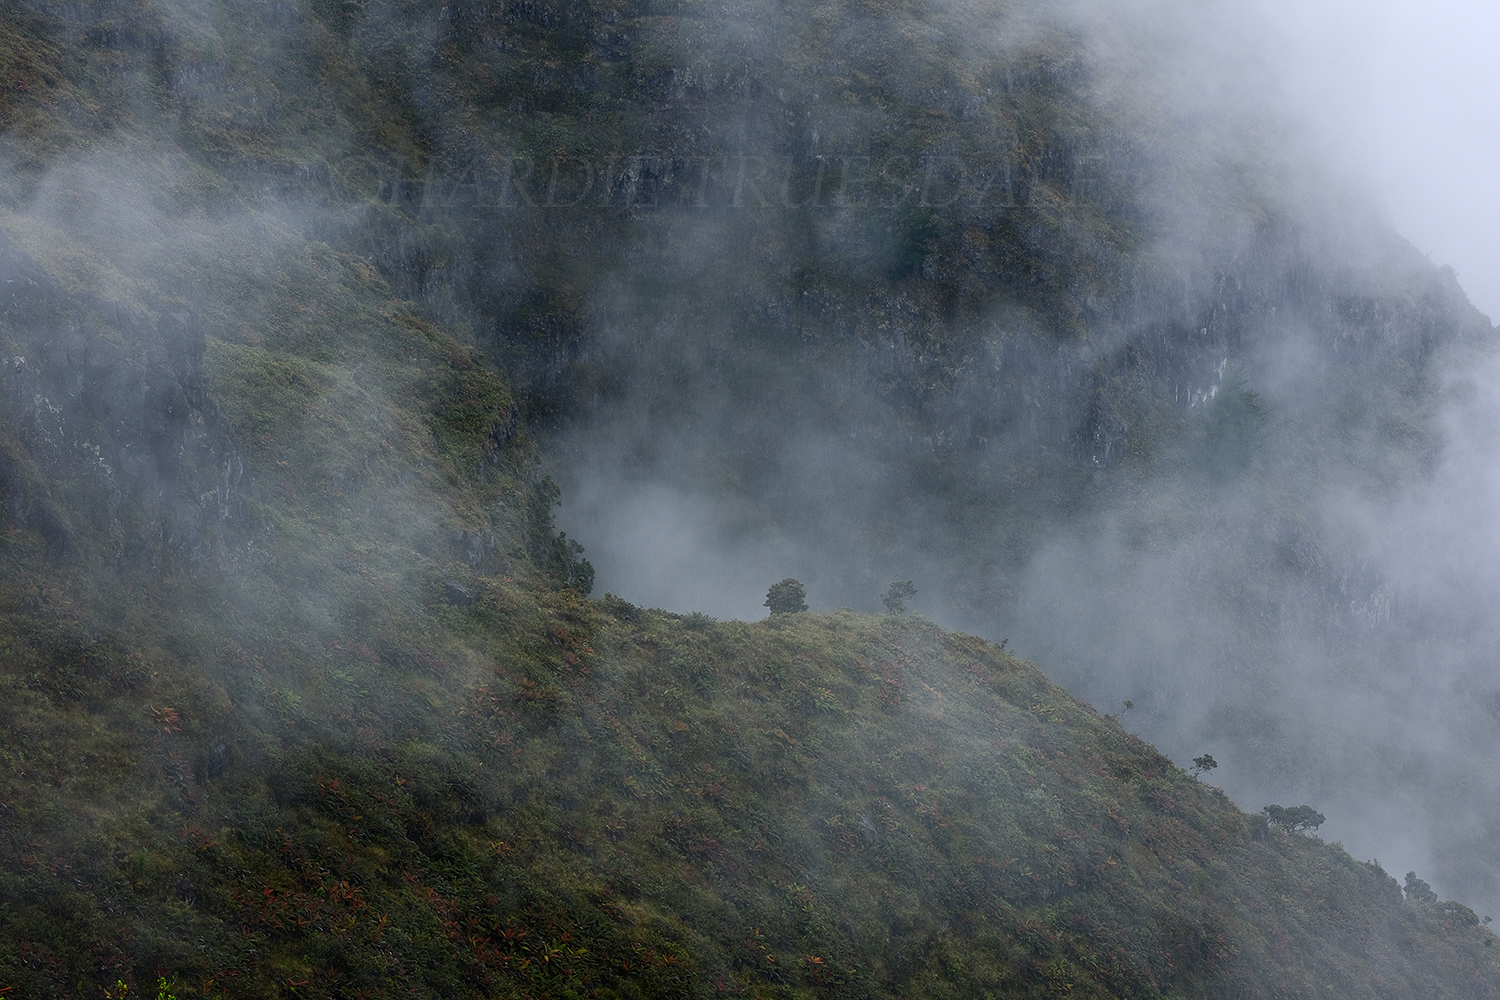  HI#52 "Haleakala In The Mist" 